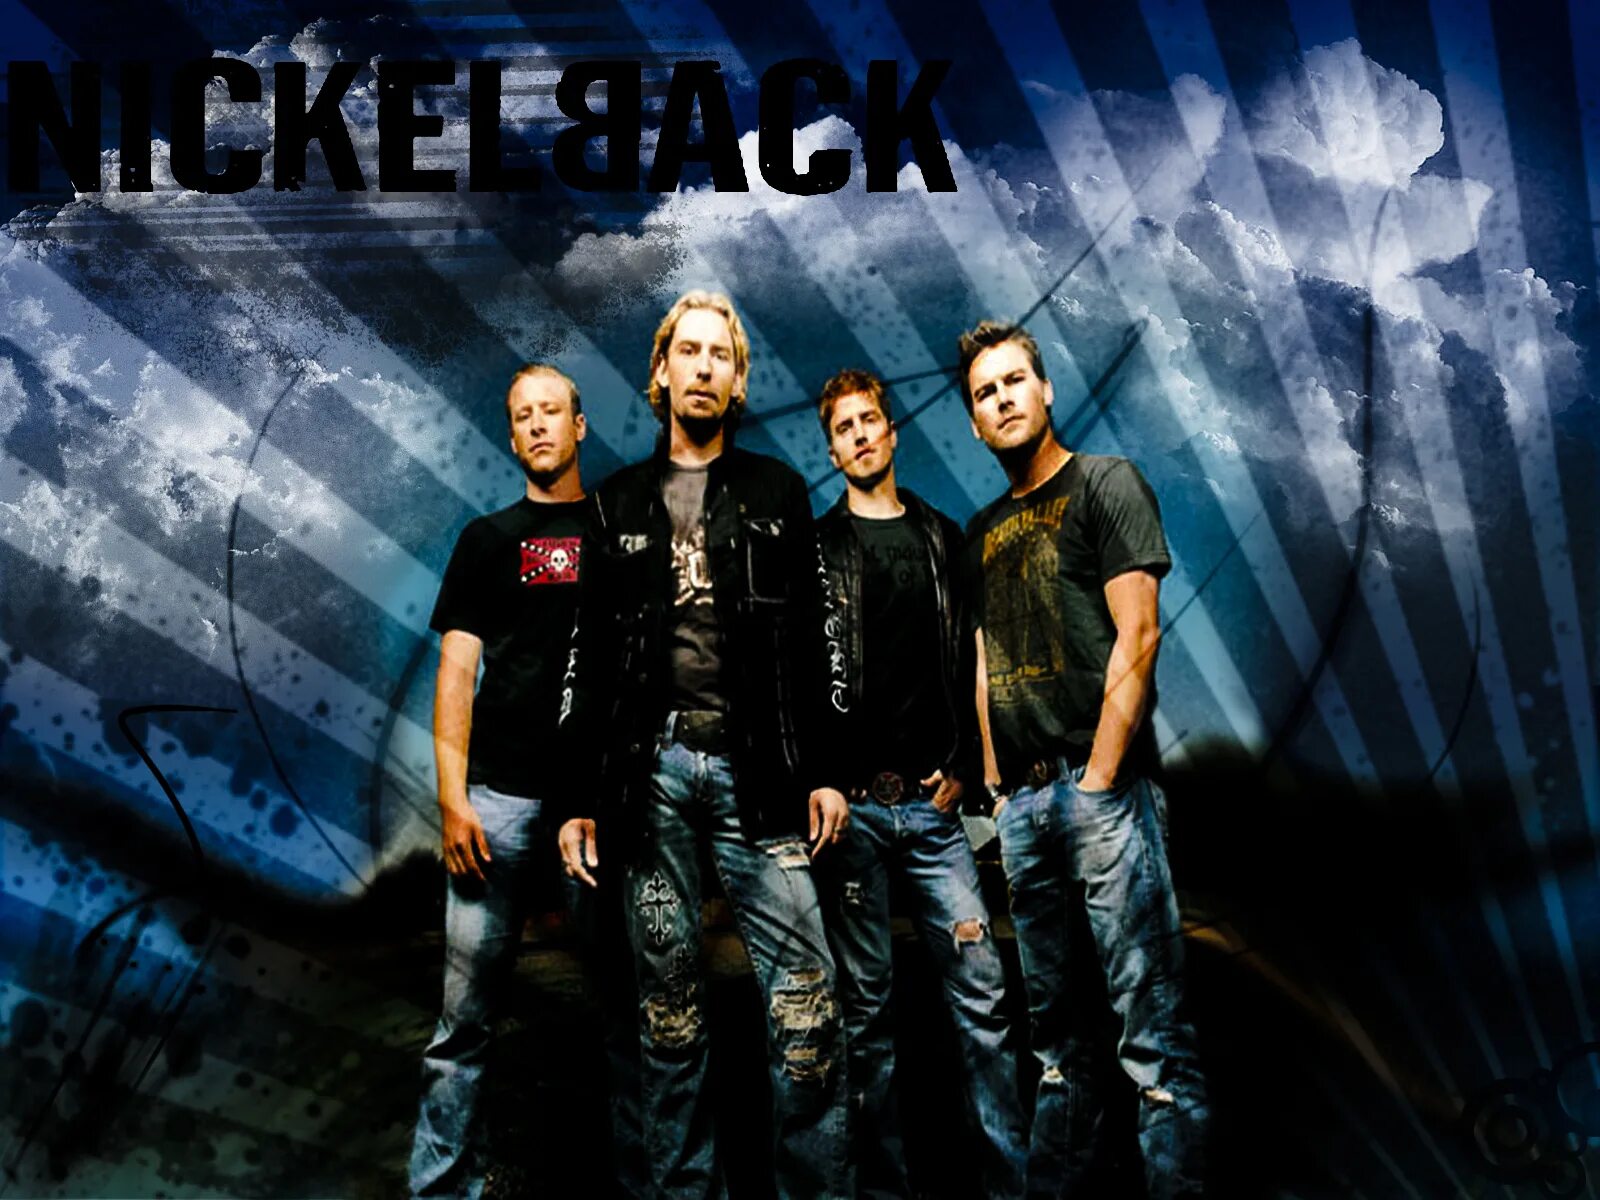 Nickelback keeps me up. Никельбэк. Группа Nickelback. Группа Nickelback альбомы. Nickelback Art.